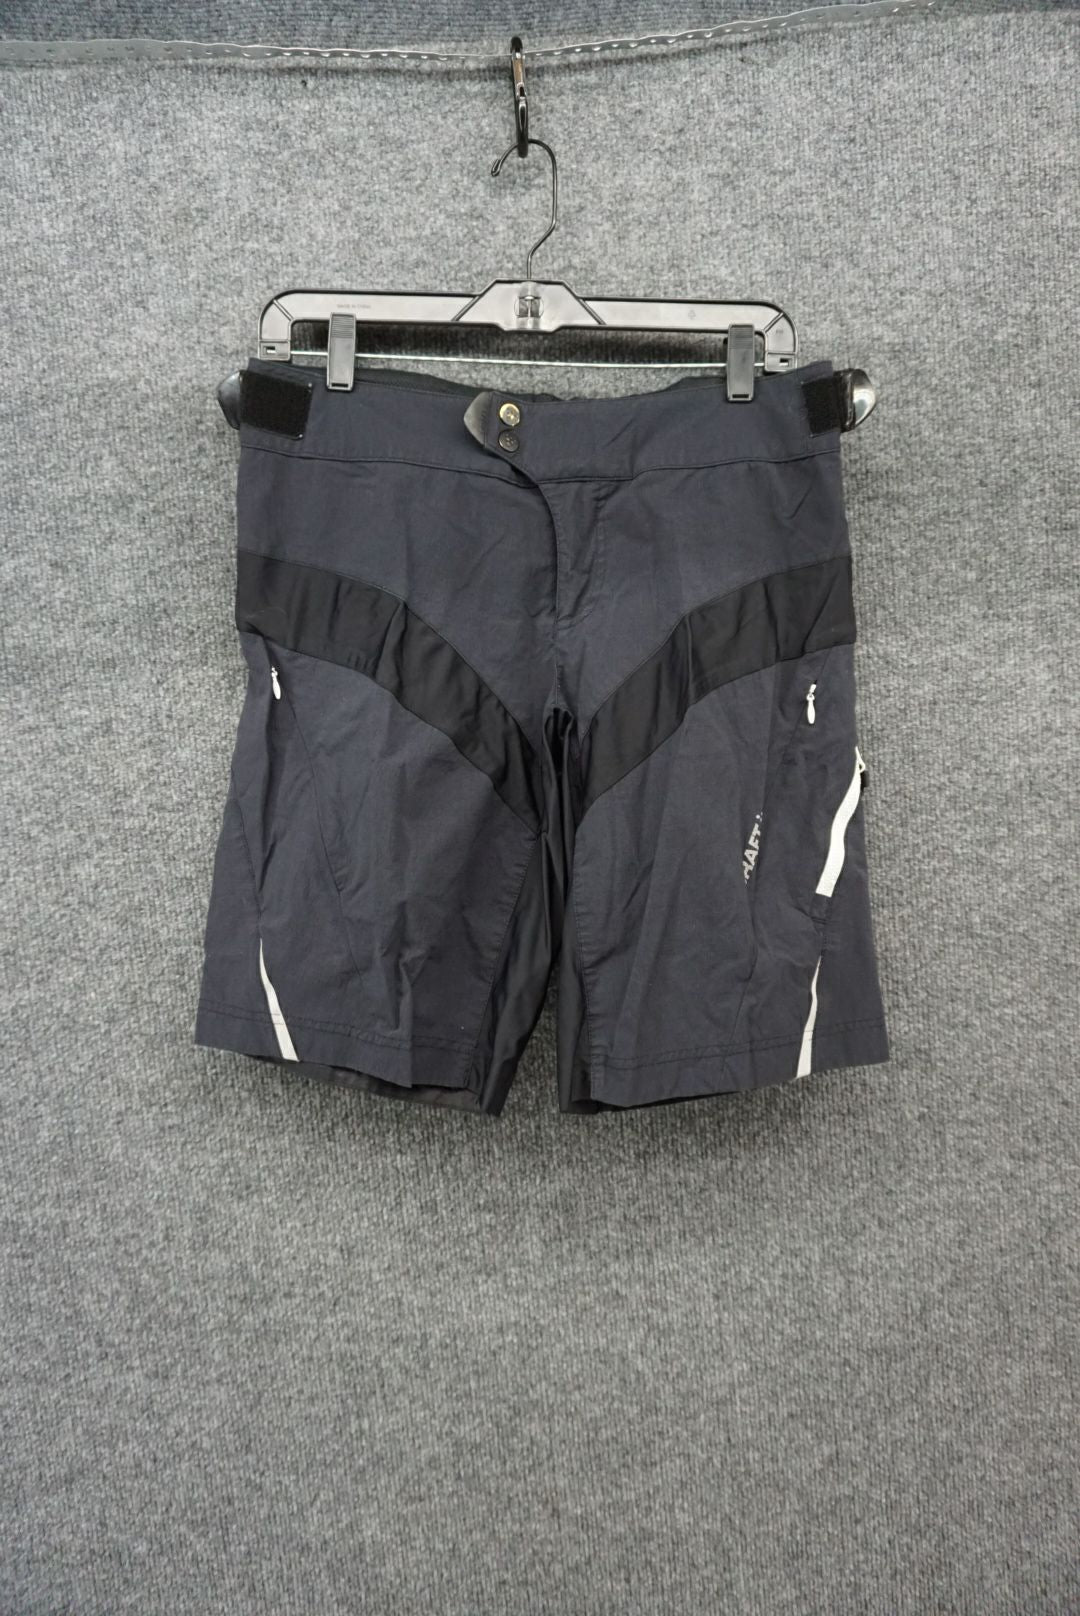 Craft Size Medium Men's Bike Shorts